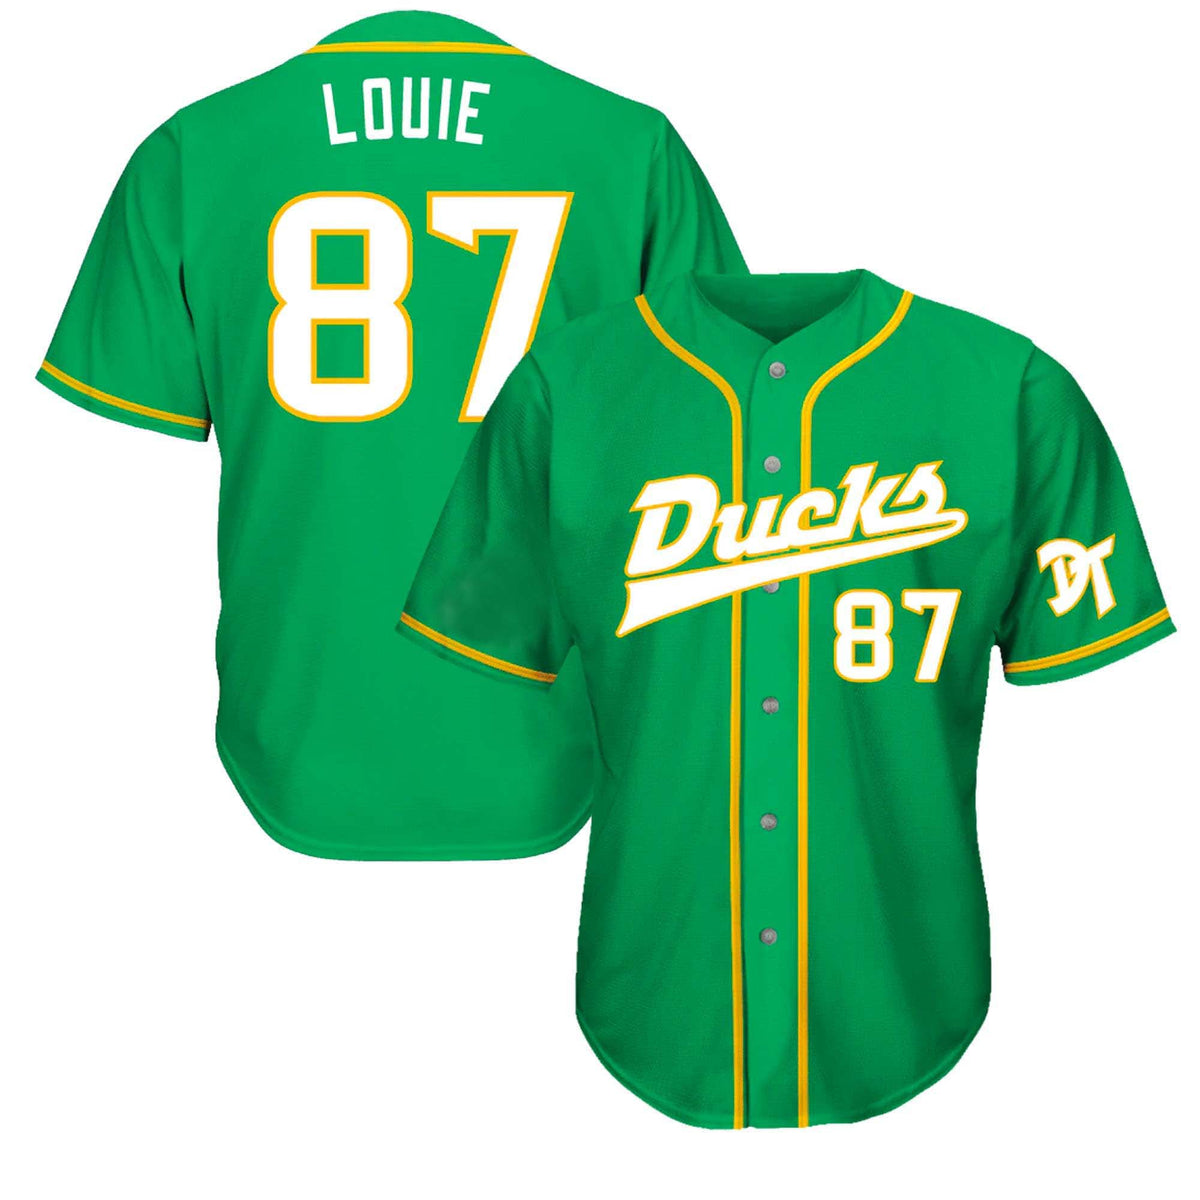 Ducks Baseball Jersey Louie